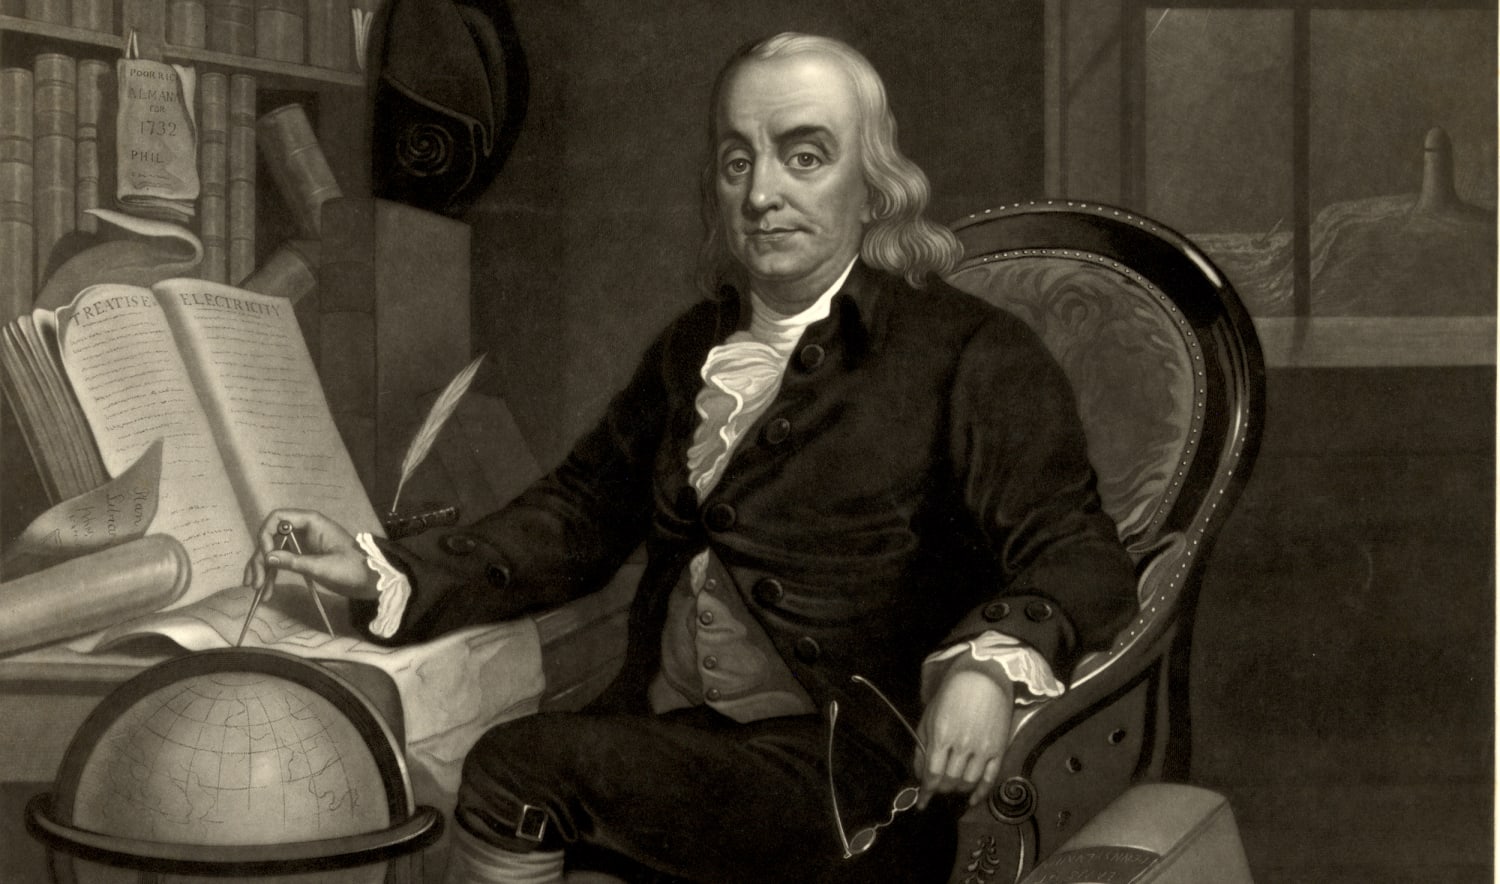 Benjamin Franklin's coronavirus advice would have been to socially